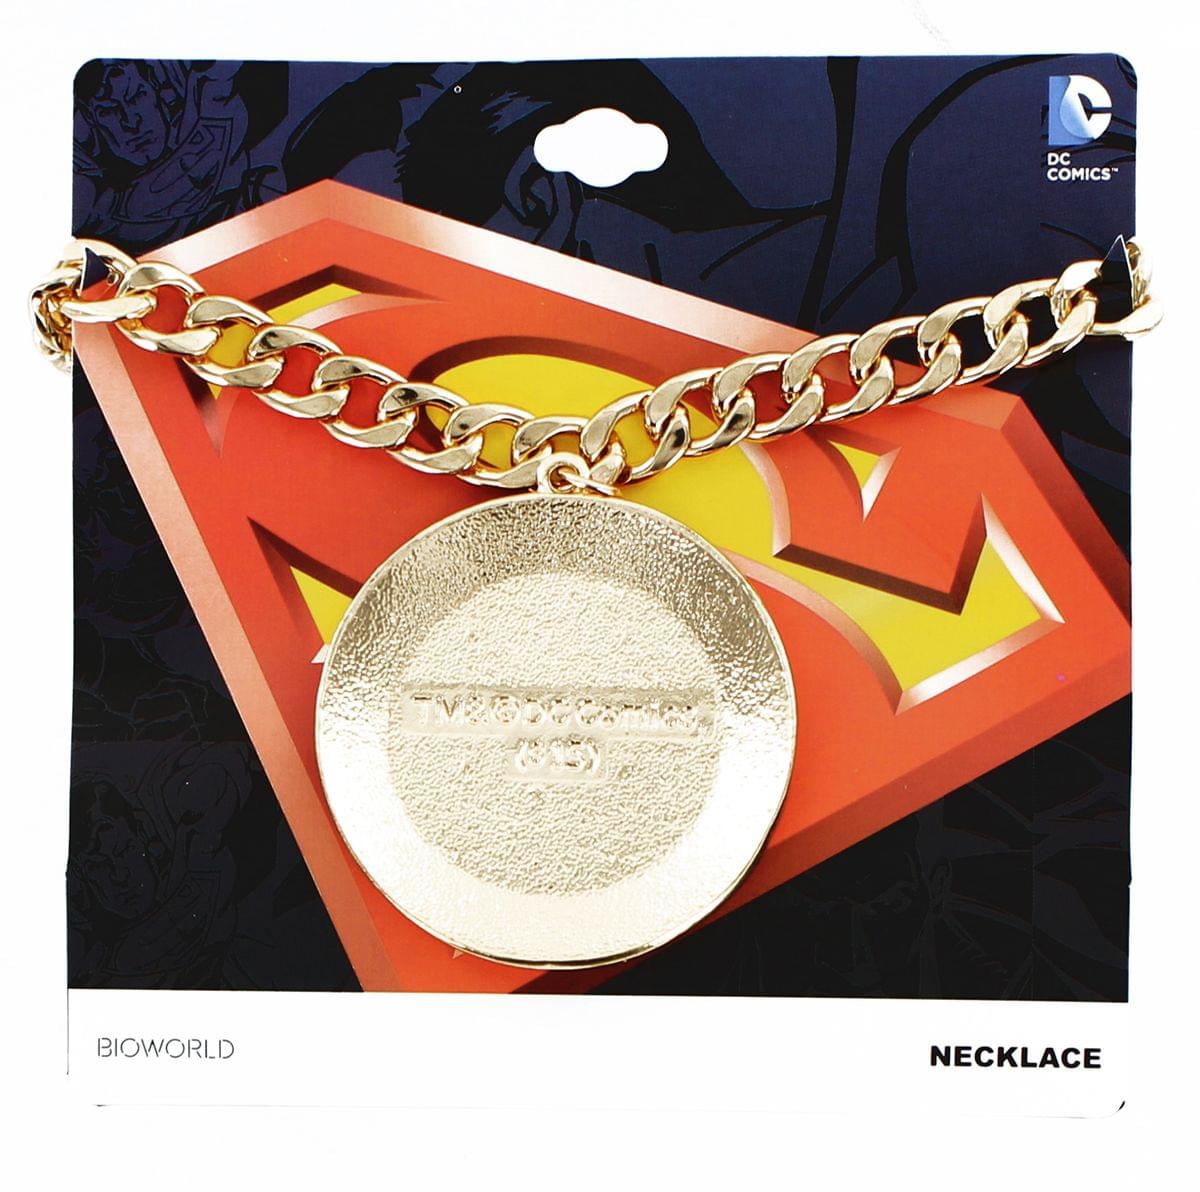 Superman Logo Bling Gold Round Sparkle Pendant Necklace